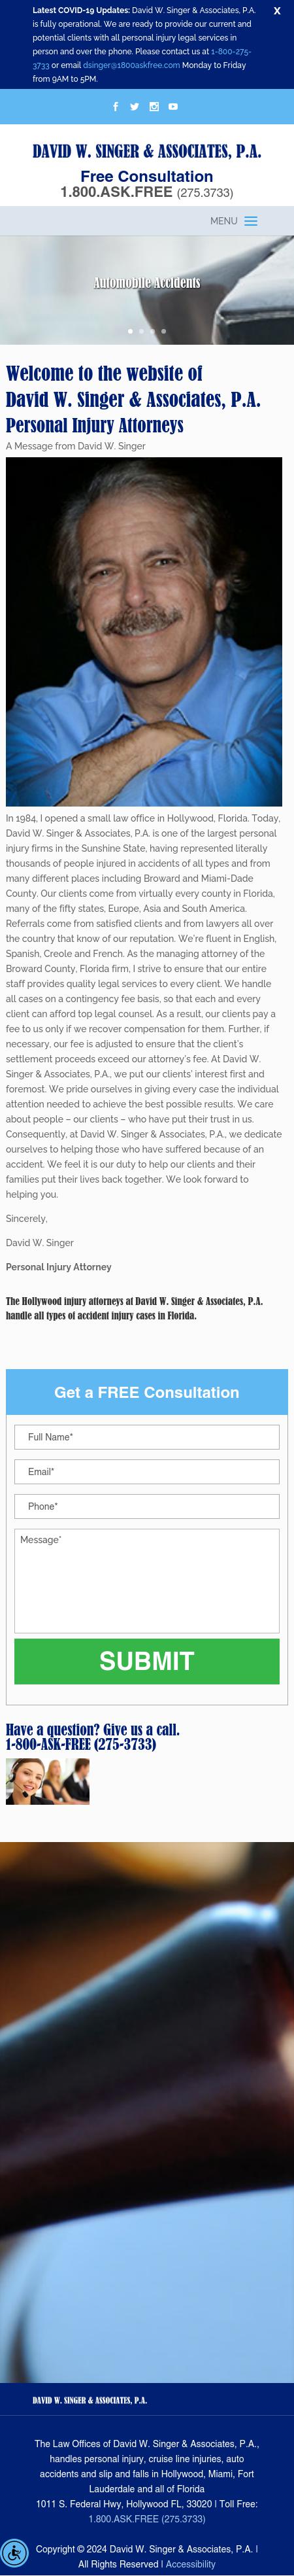 David W Singer Personal Injury Attorney Law Firm - Hollywood FL Lawyers